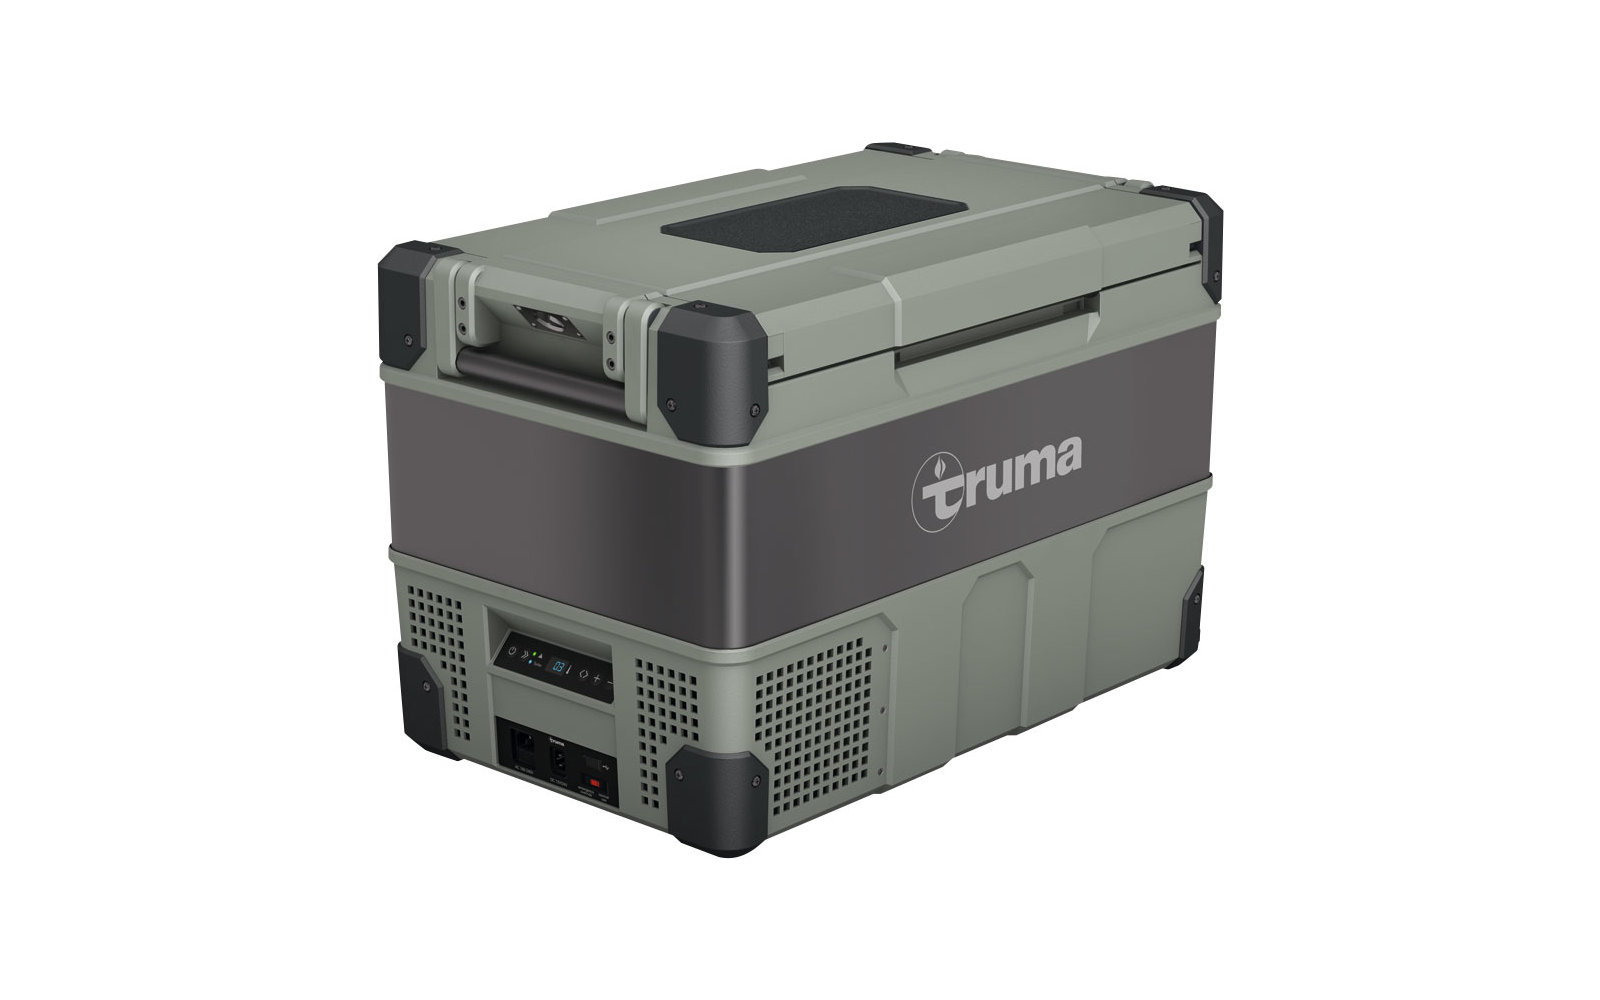   TRUMA Cooler C60 / Single Zone Kompressorkühlbox mit Tiefkühlfunktion / 60 Liter